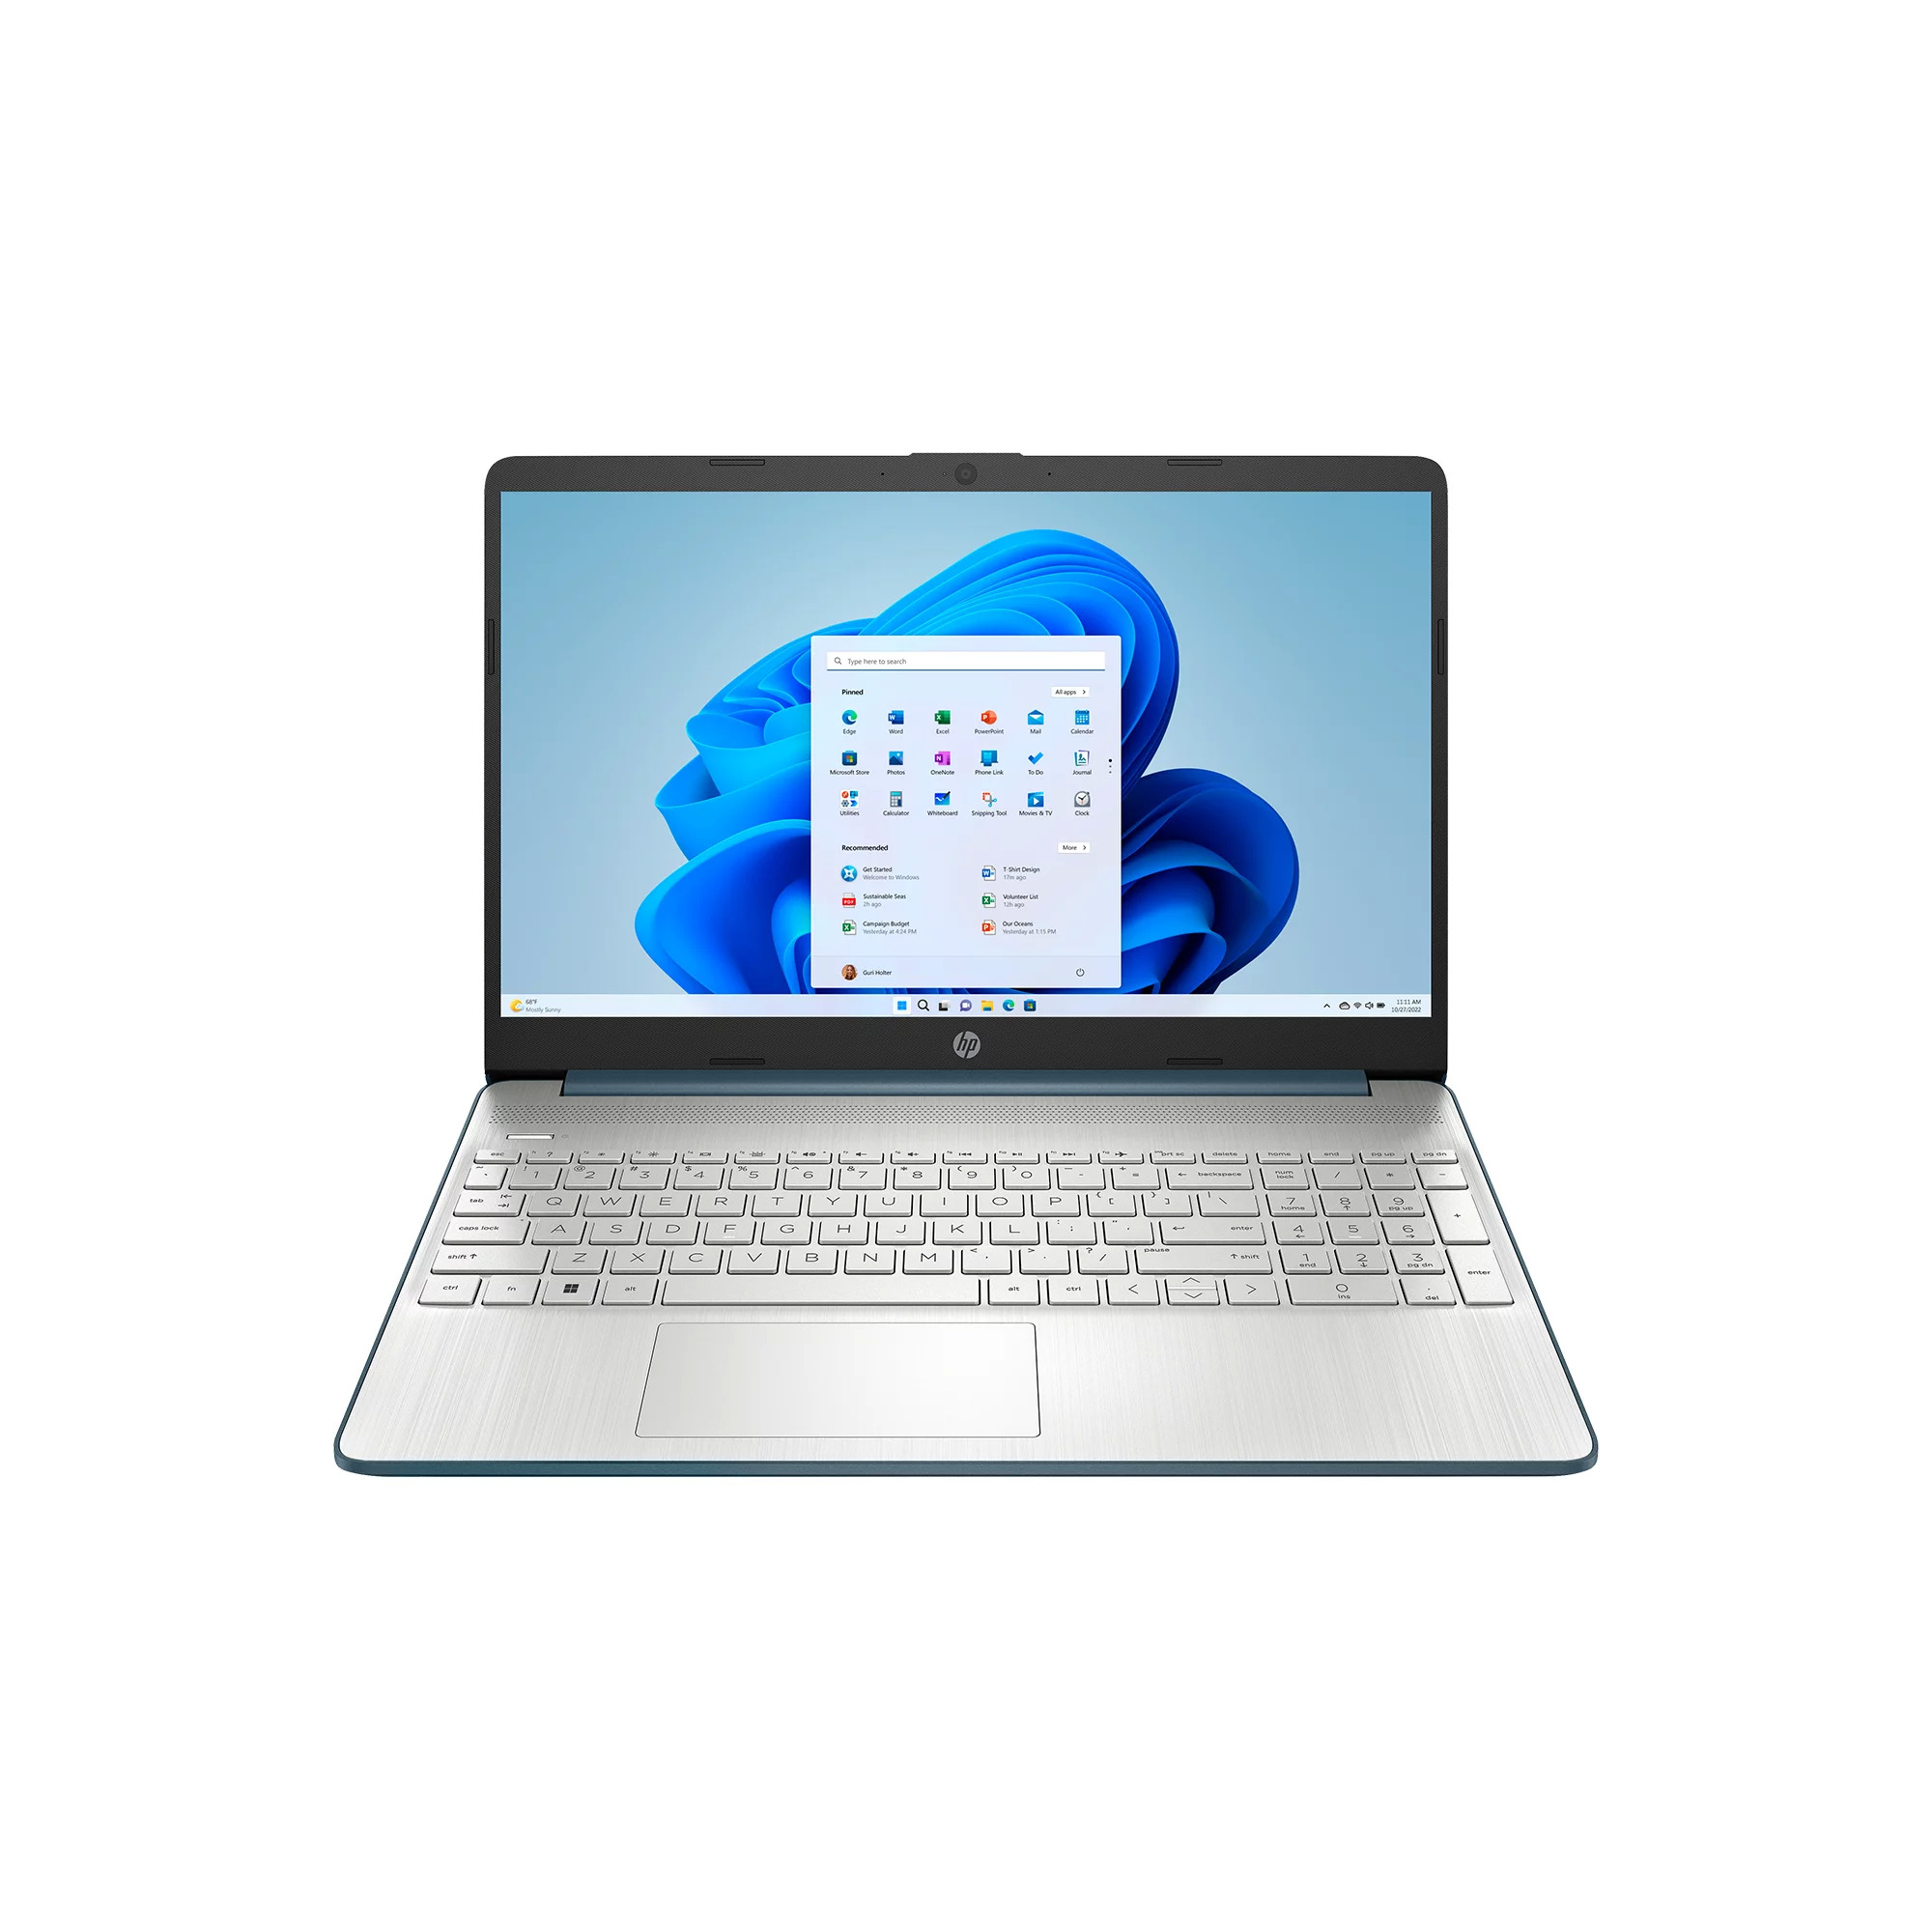 HP 15.6" Laptop, Intel Core i3-1115G4, 8GB RAM, 256GB SSD, Spruce Blue - $299 + Free Shipping @ Walmart